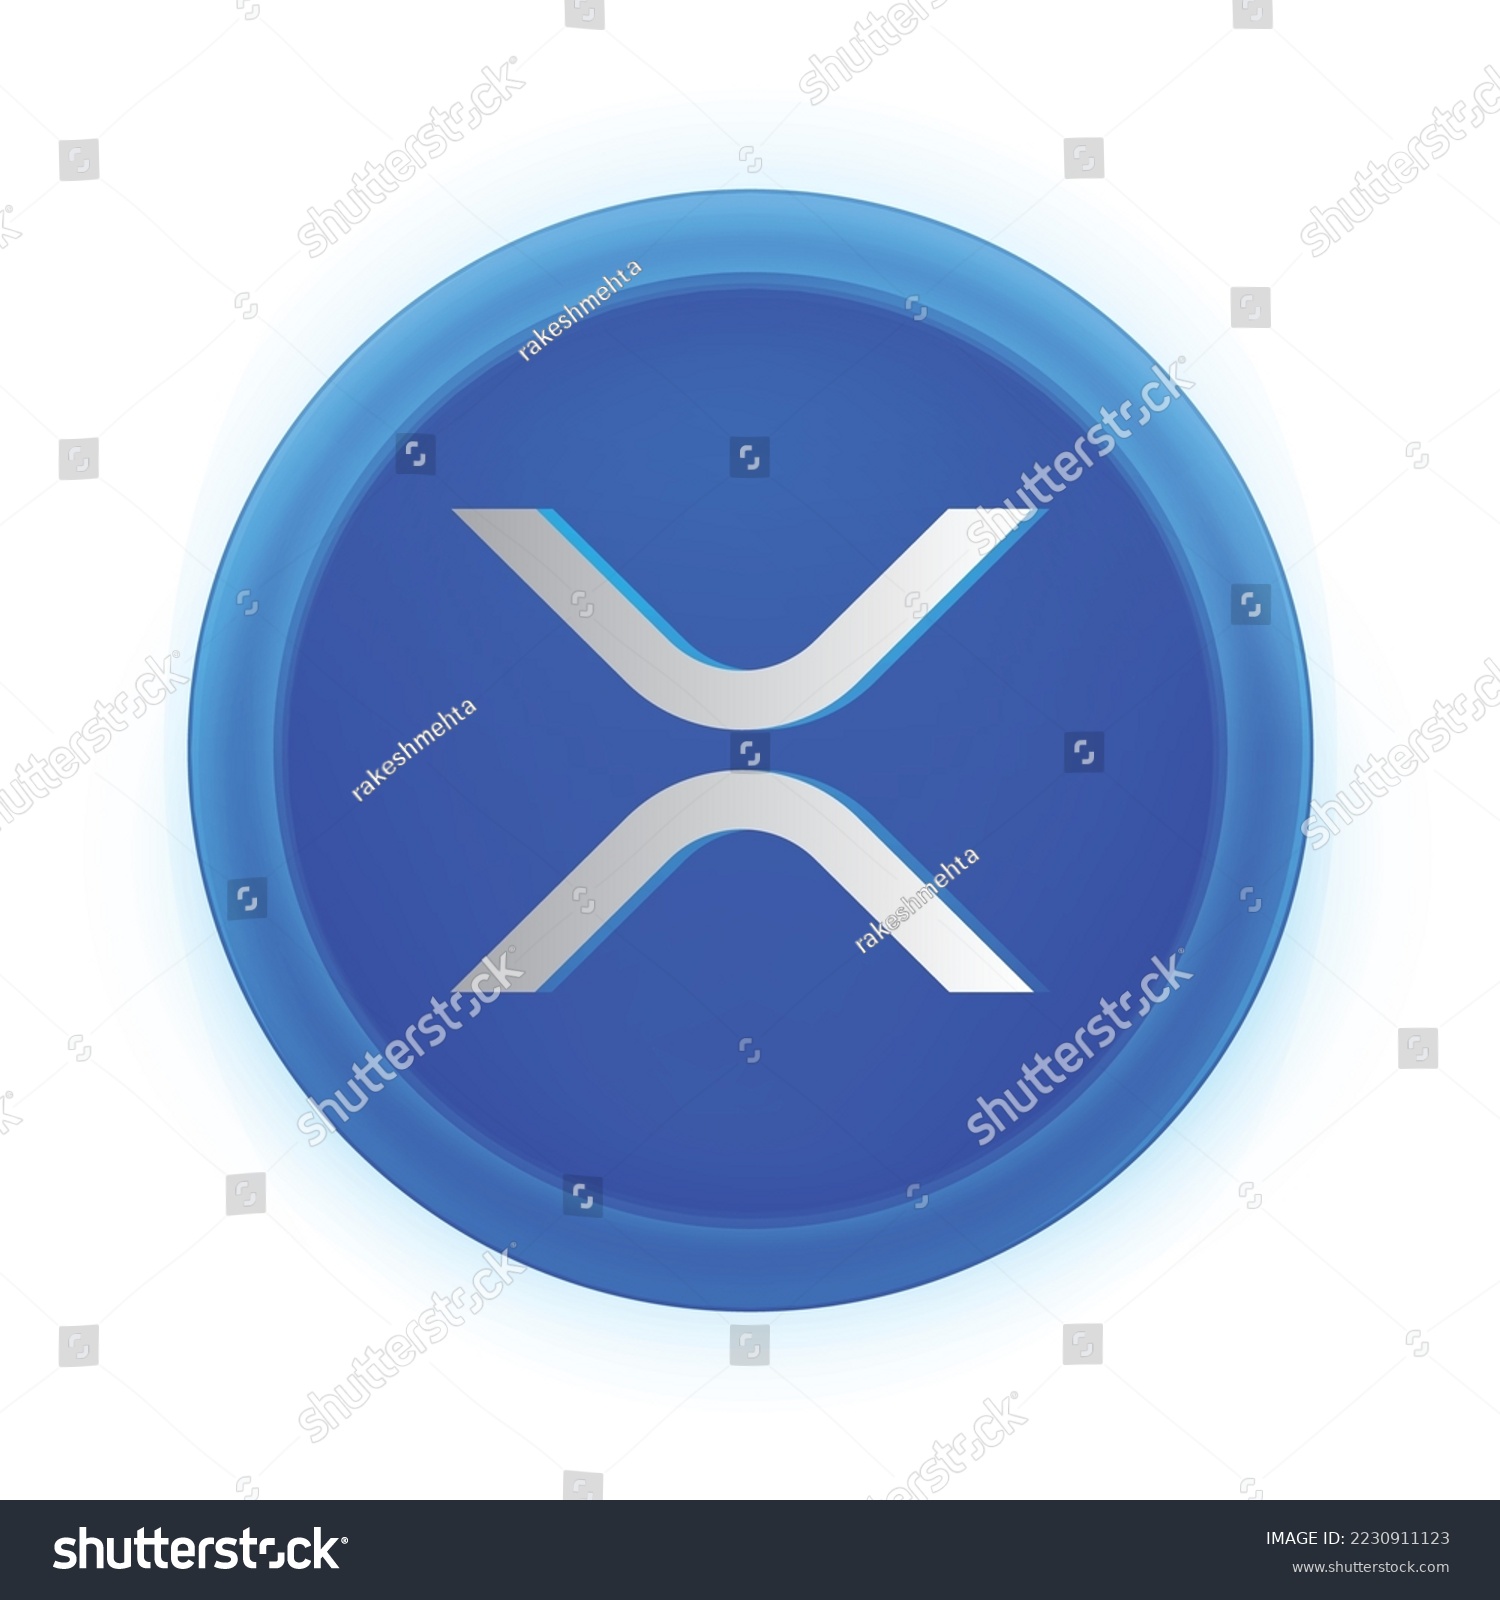 SVG of Xrp crypto logo isolated on white background.  svg